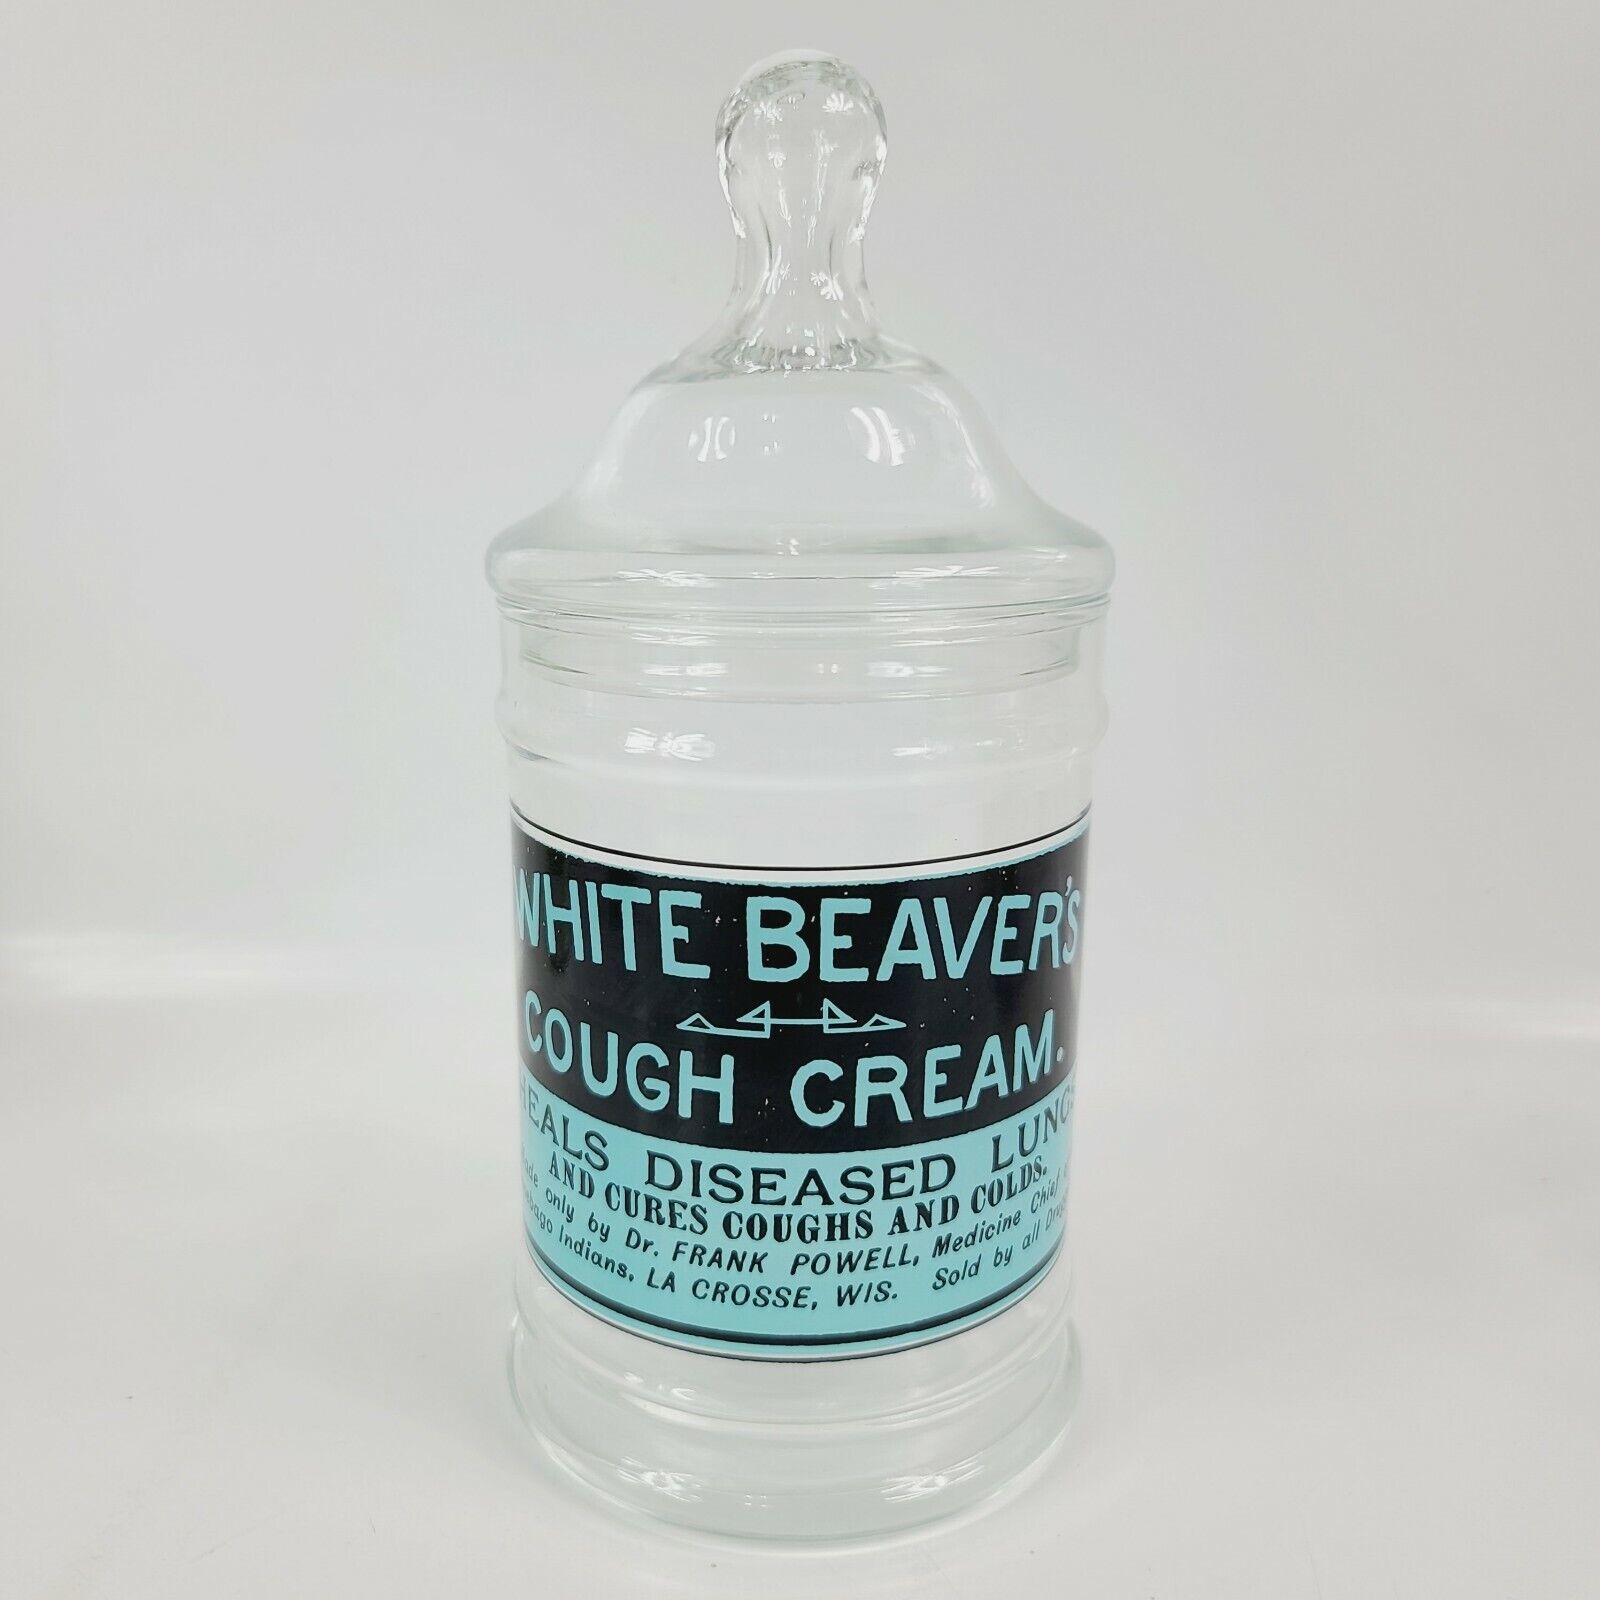 UNIQUE Apothecary Glass JAR DR POWELL White Beavers Cough Cream LACROSSE WI RARE